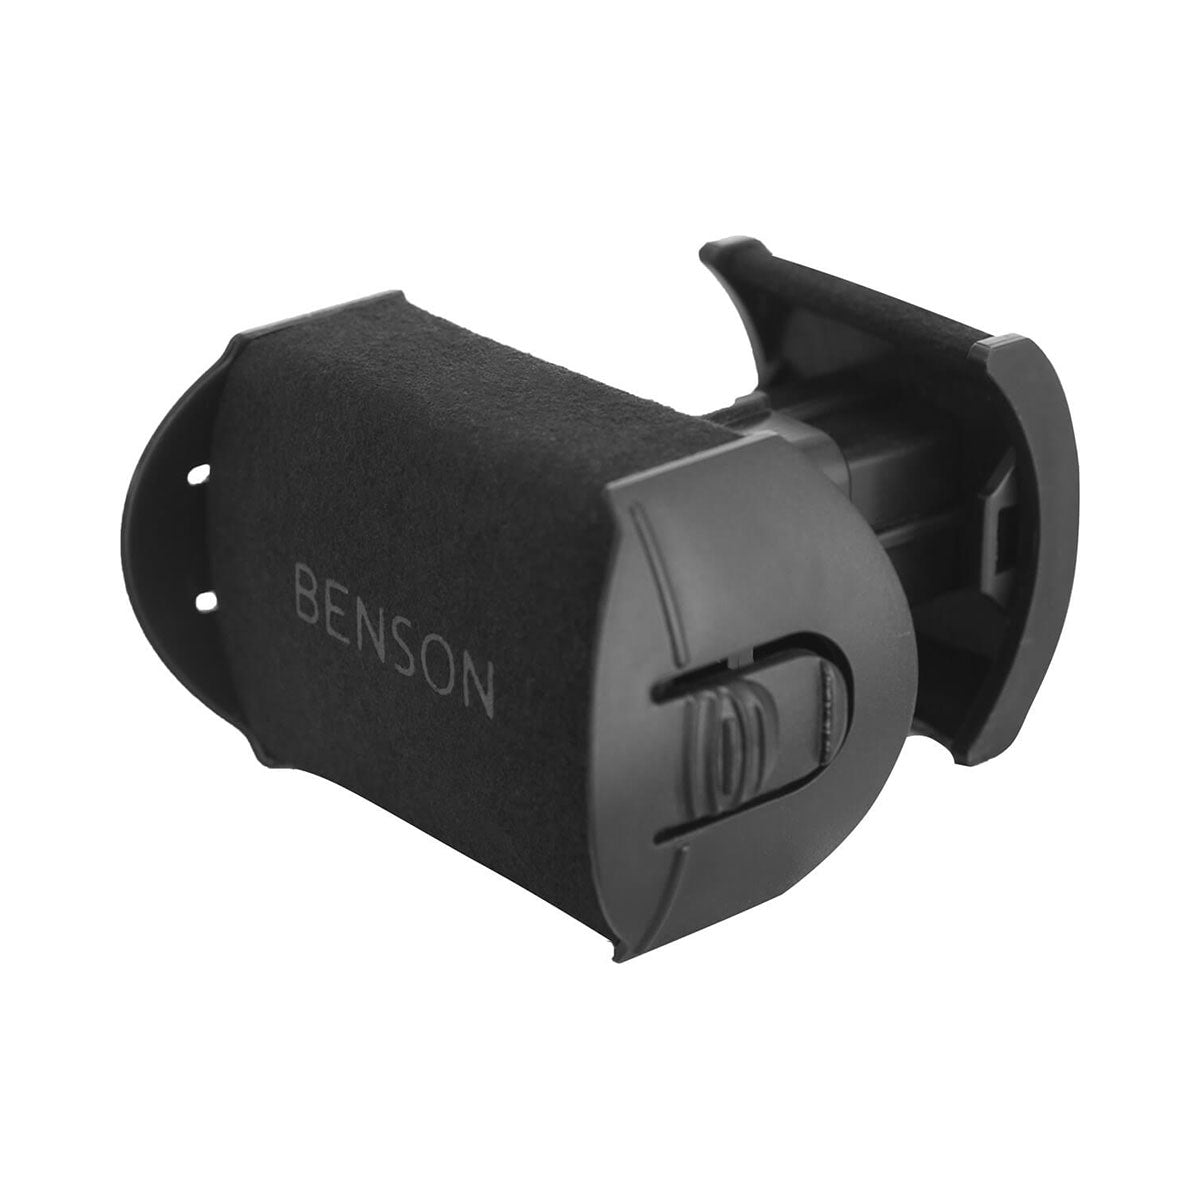 Benson Black Series 2.16 - Watch winder for 2 watches